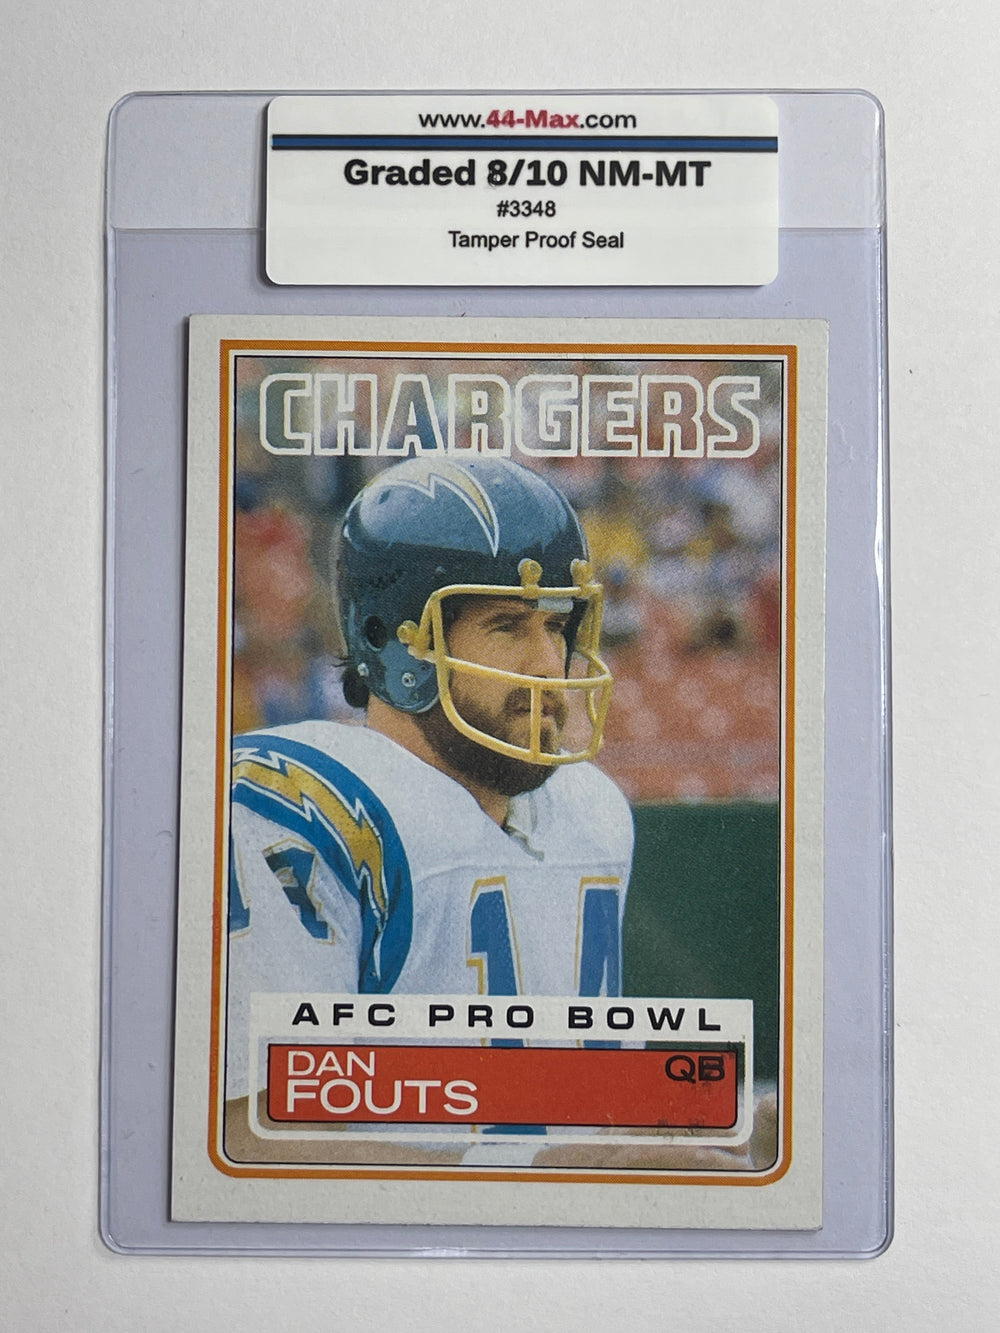 Dan Fouts 1983 Topps Football Card. 44-Max 8/10 NM-MT #3348